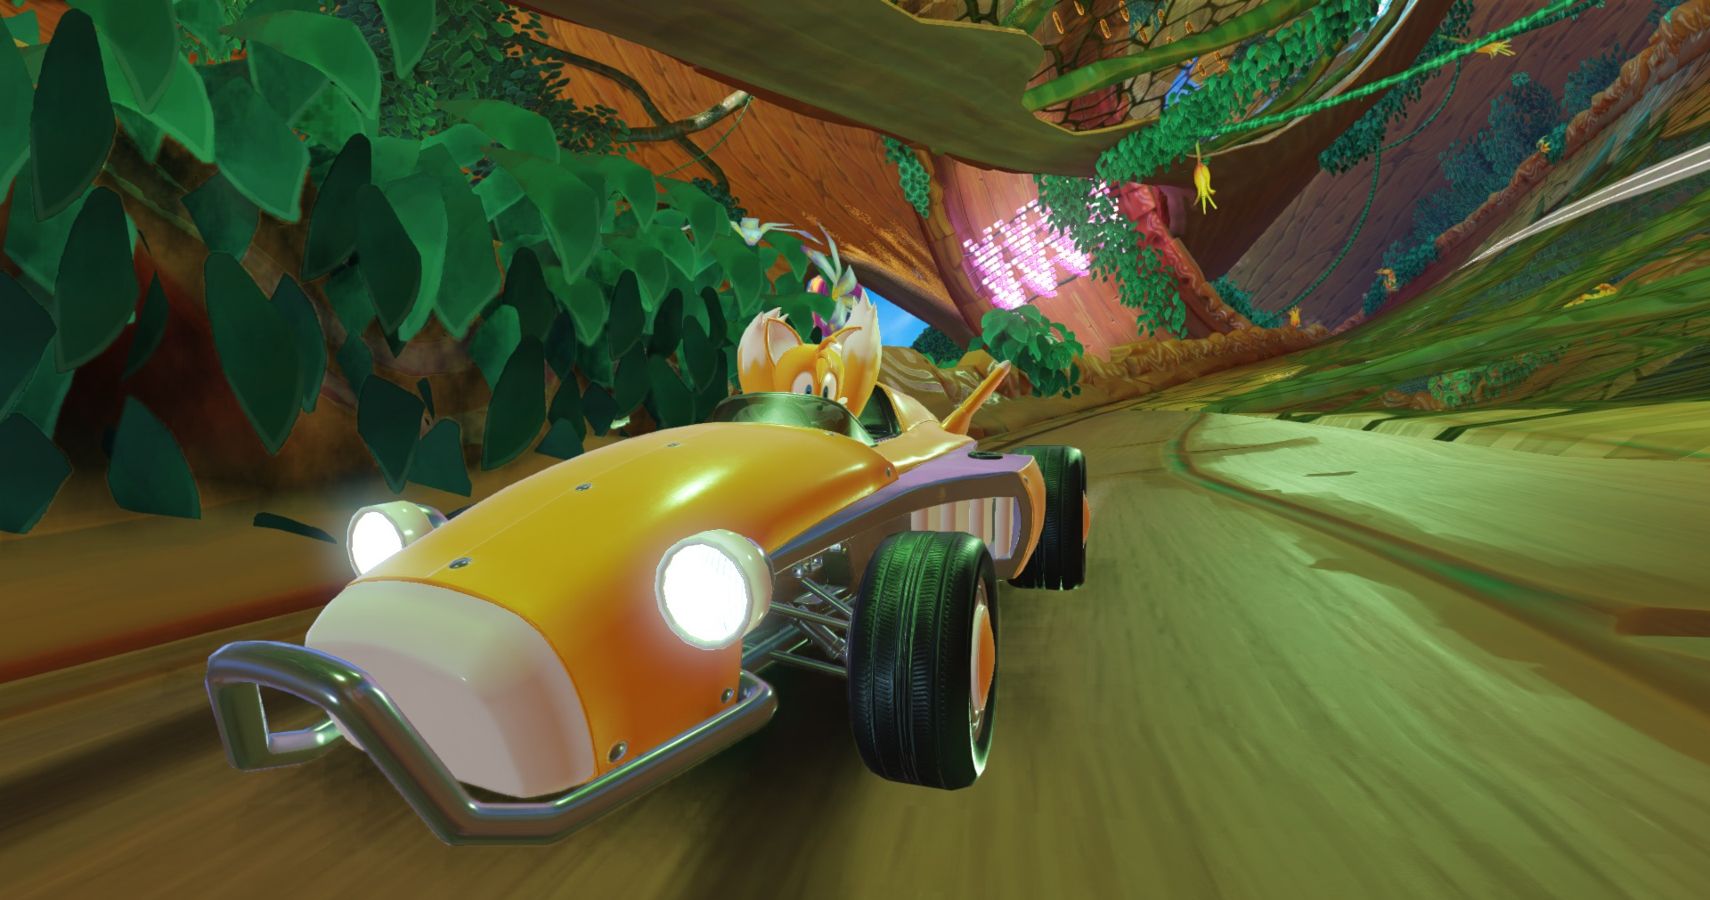 Tails Team Sonic Racing Amazon Luna